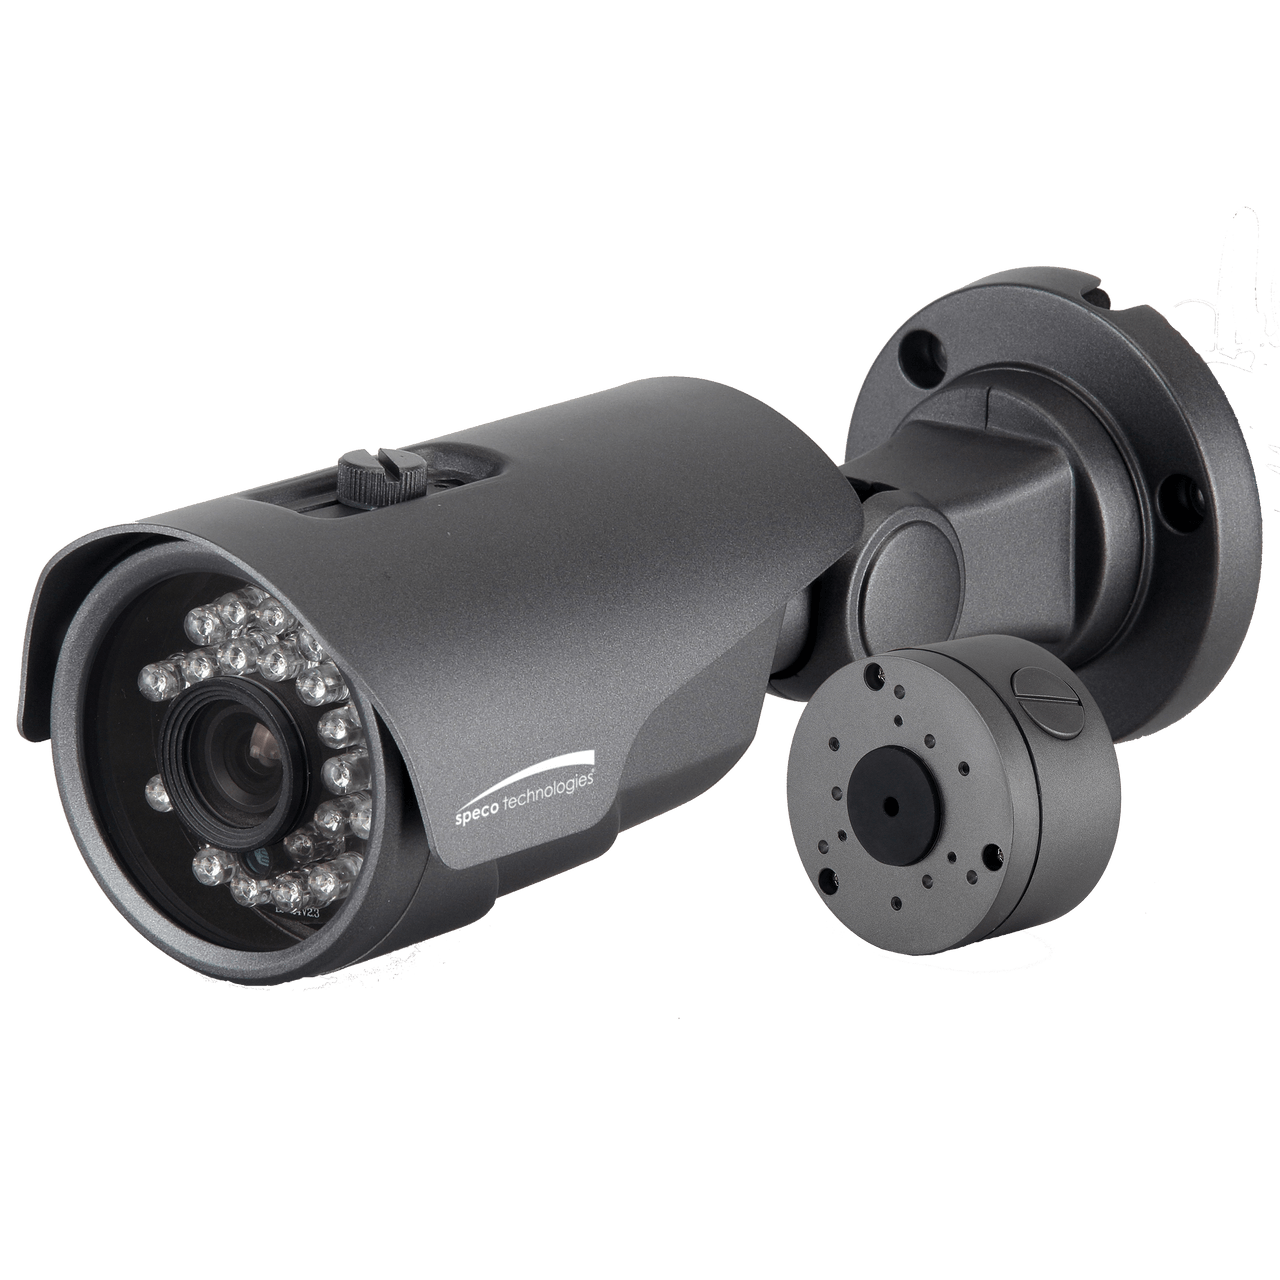 Speco Technologies SPE-HTB5TG 5MP HD-TVI Bullet, IR, 2.8mm lens, Grey housing, Included Junc Box, TAA (SPE-HTB5TG)